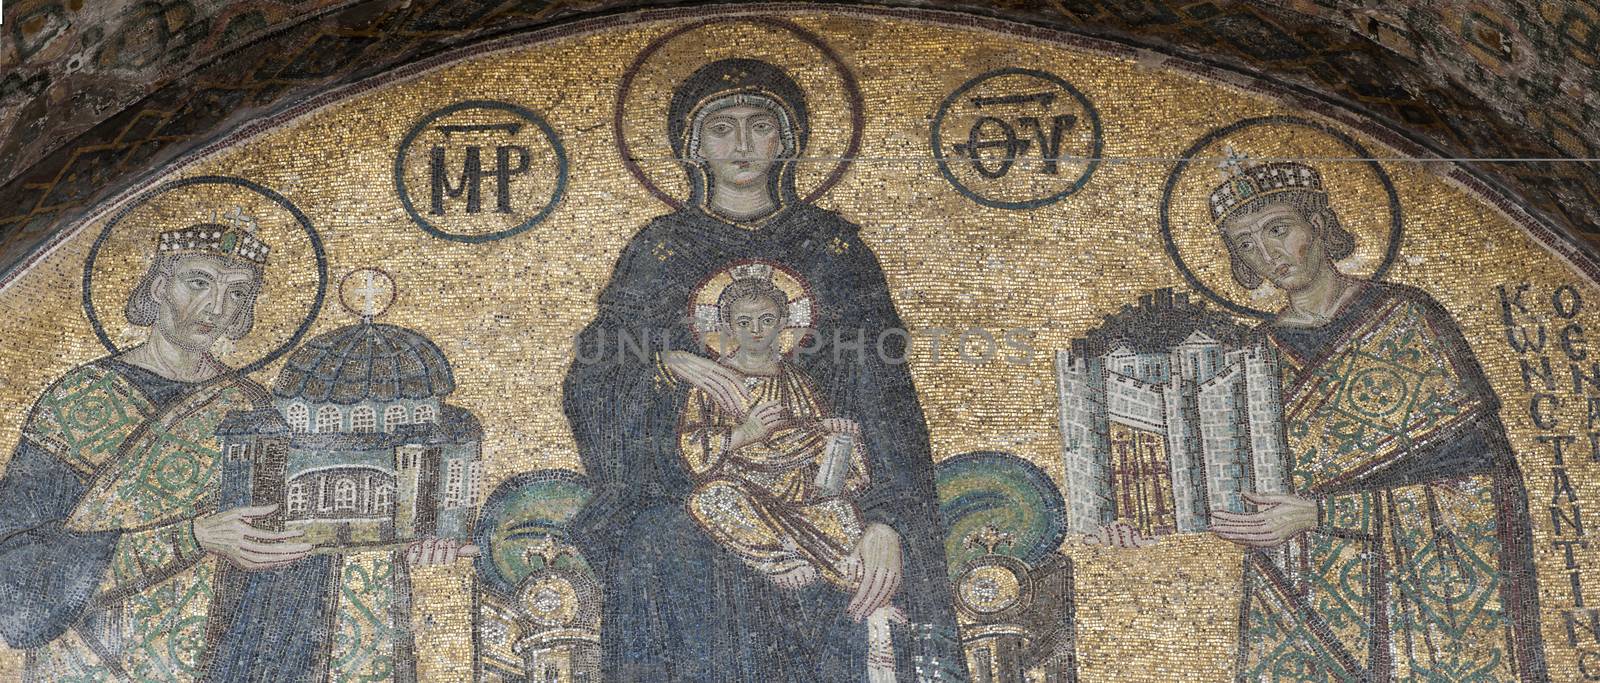 Mosaic artwork in Hagia Sophia Istanbul by paulvinten